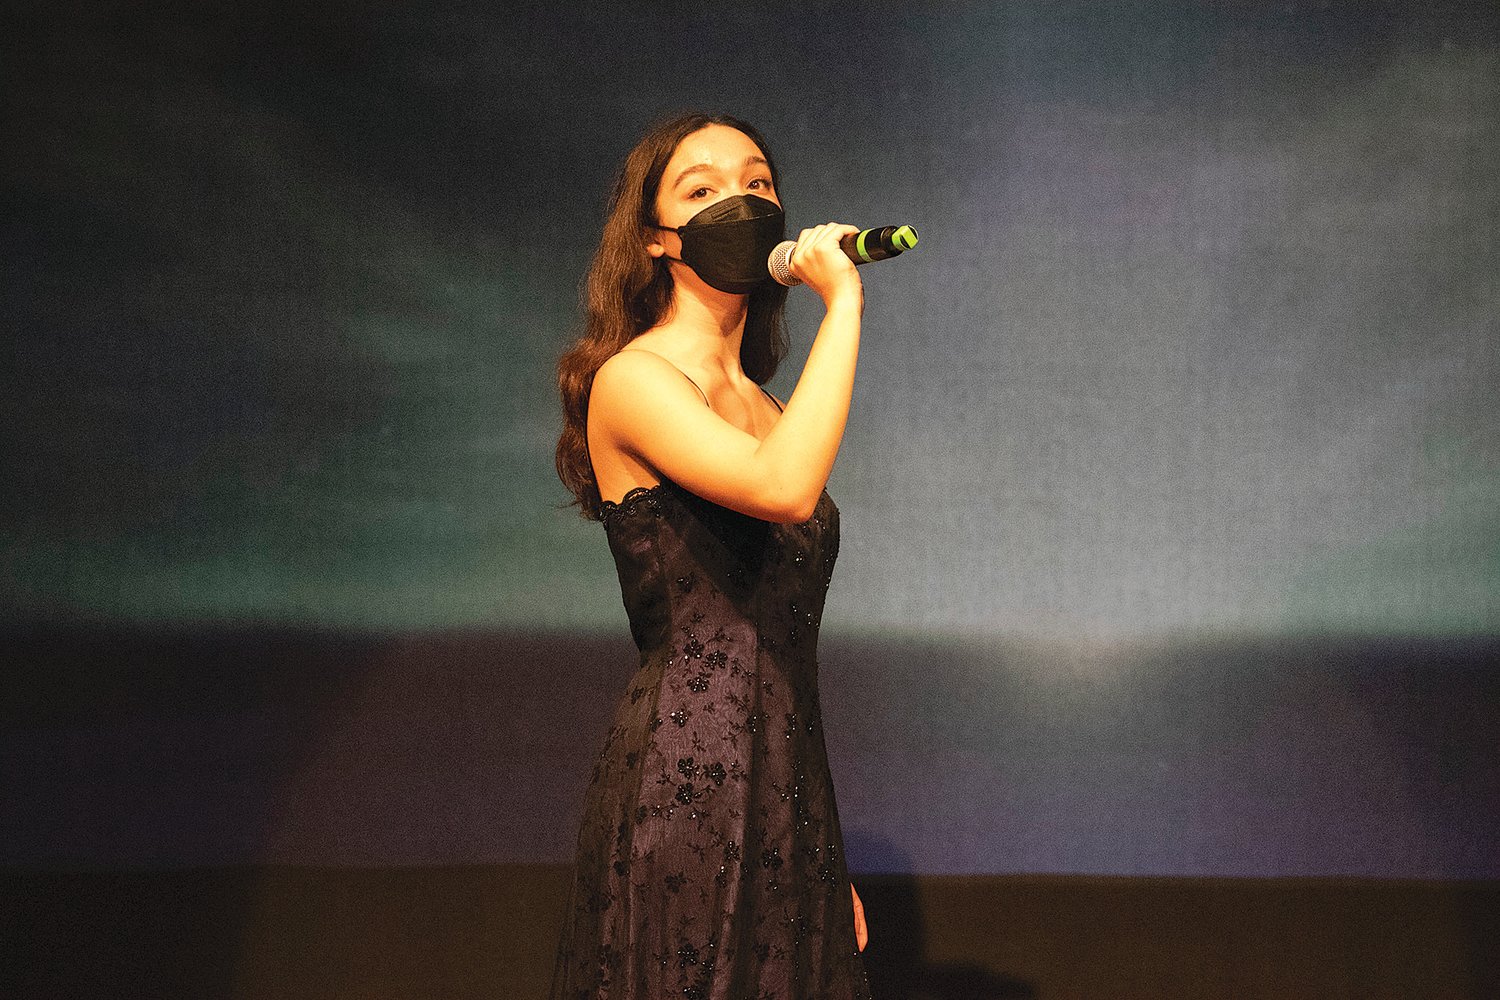 In Barrington High School’s version of the masked singer, Isabel Denise sings “Meadowlark” during a Stagemasters performance last week.